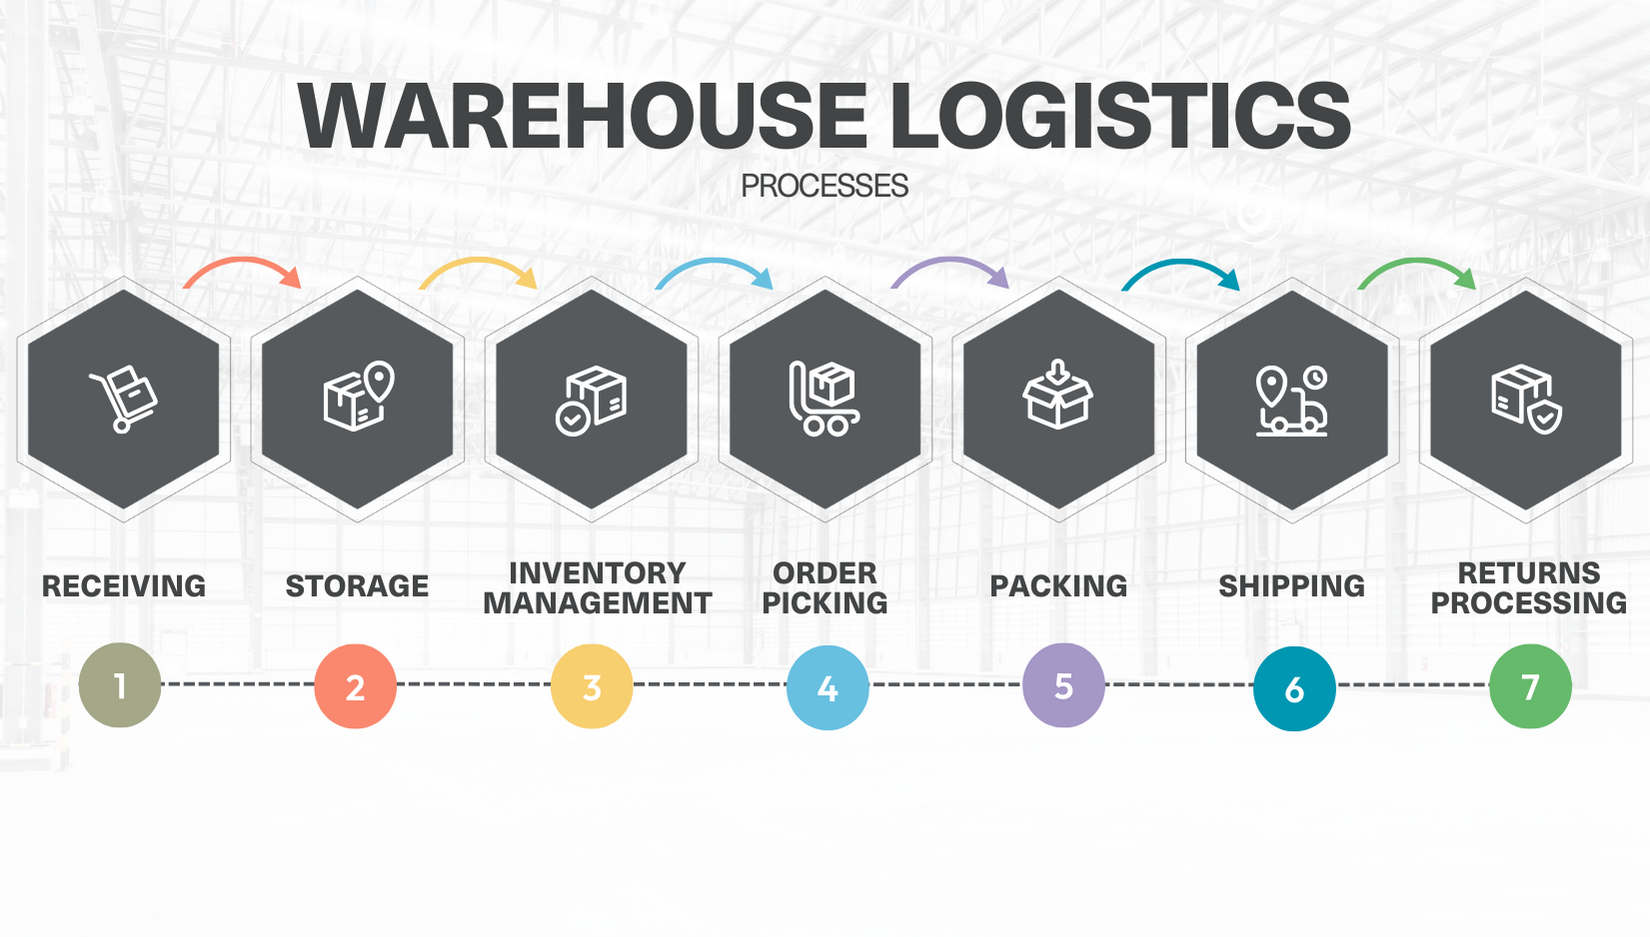 Warehouse Logistics -Processes